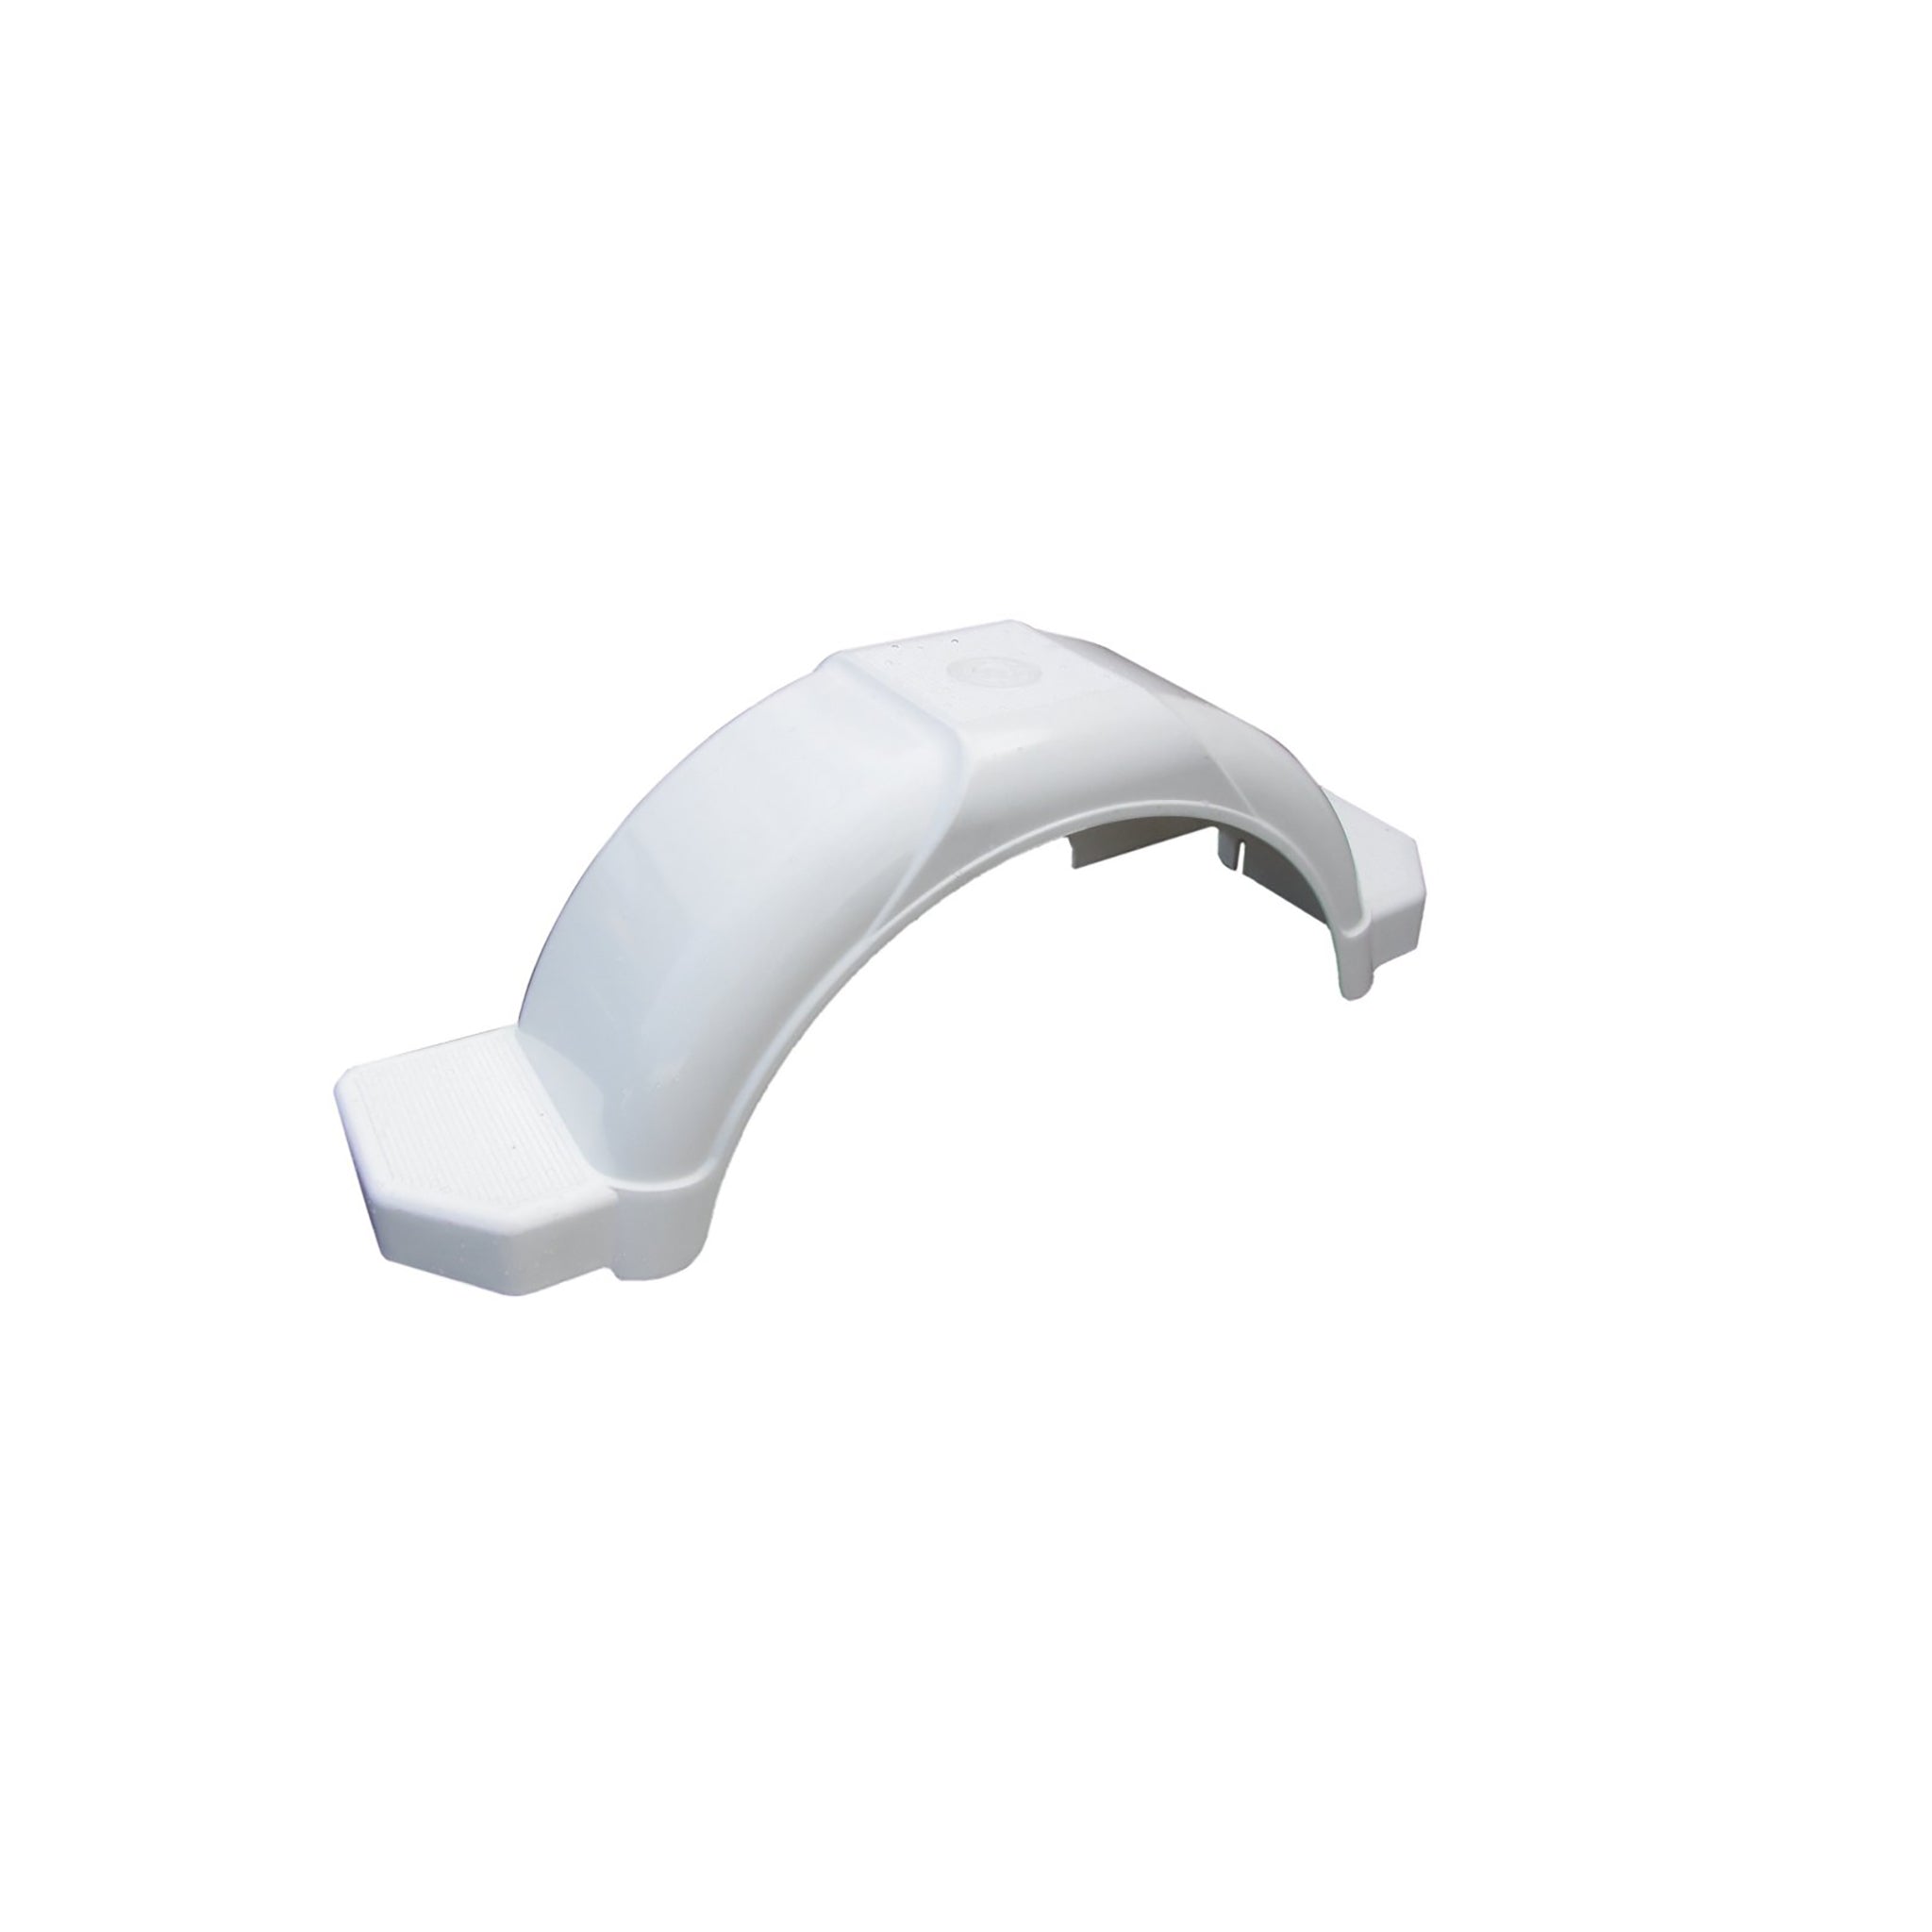 Plastic mudguard 14-15 inch - white